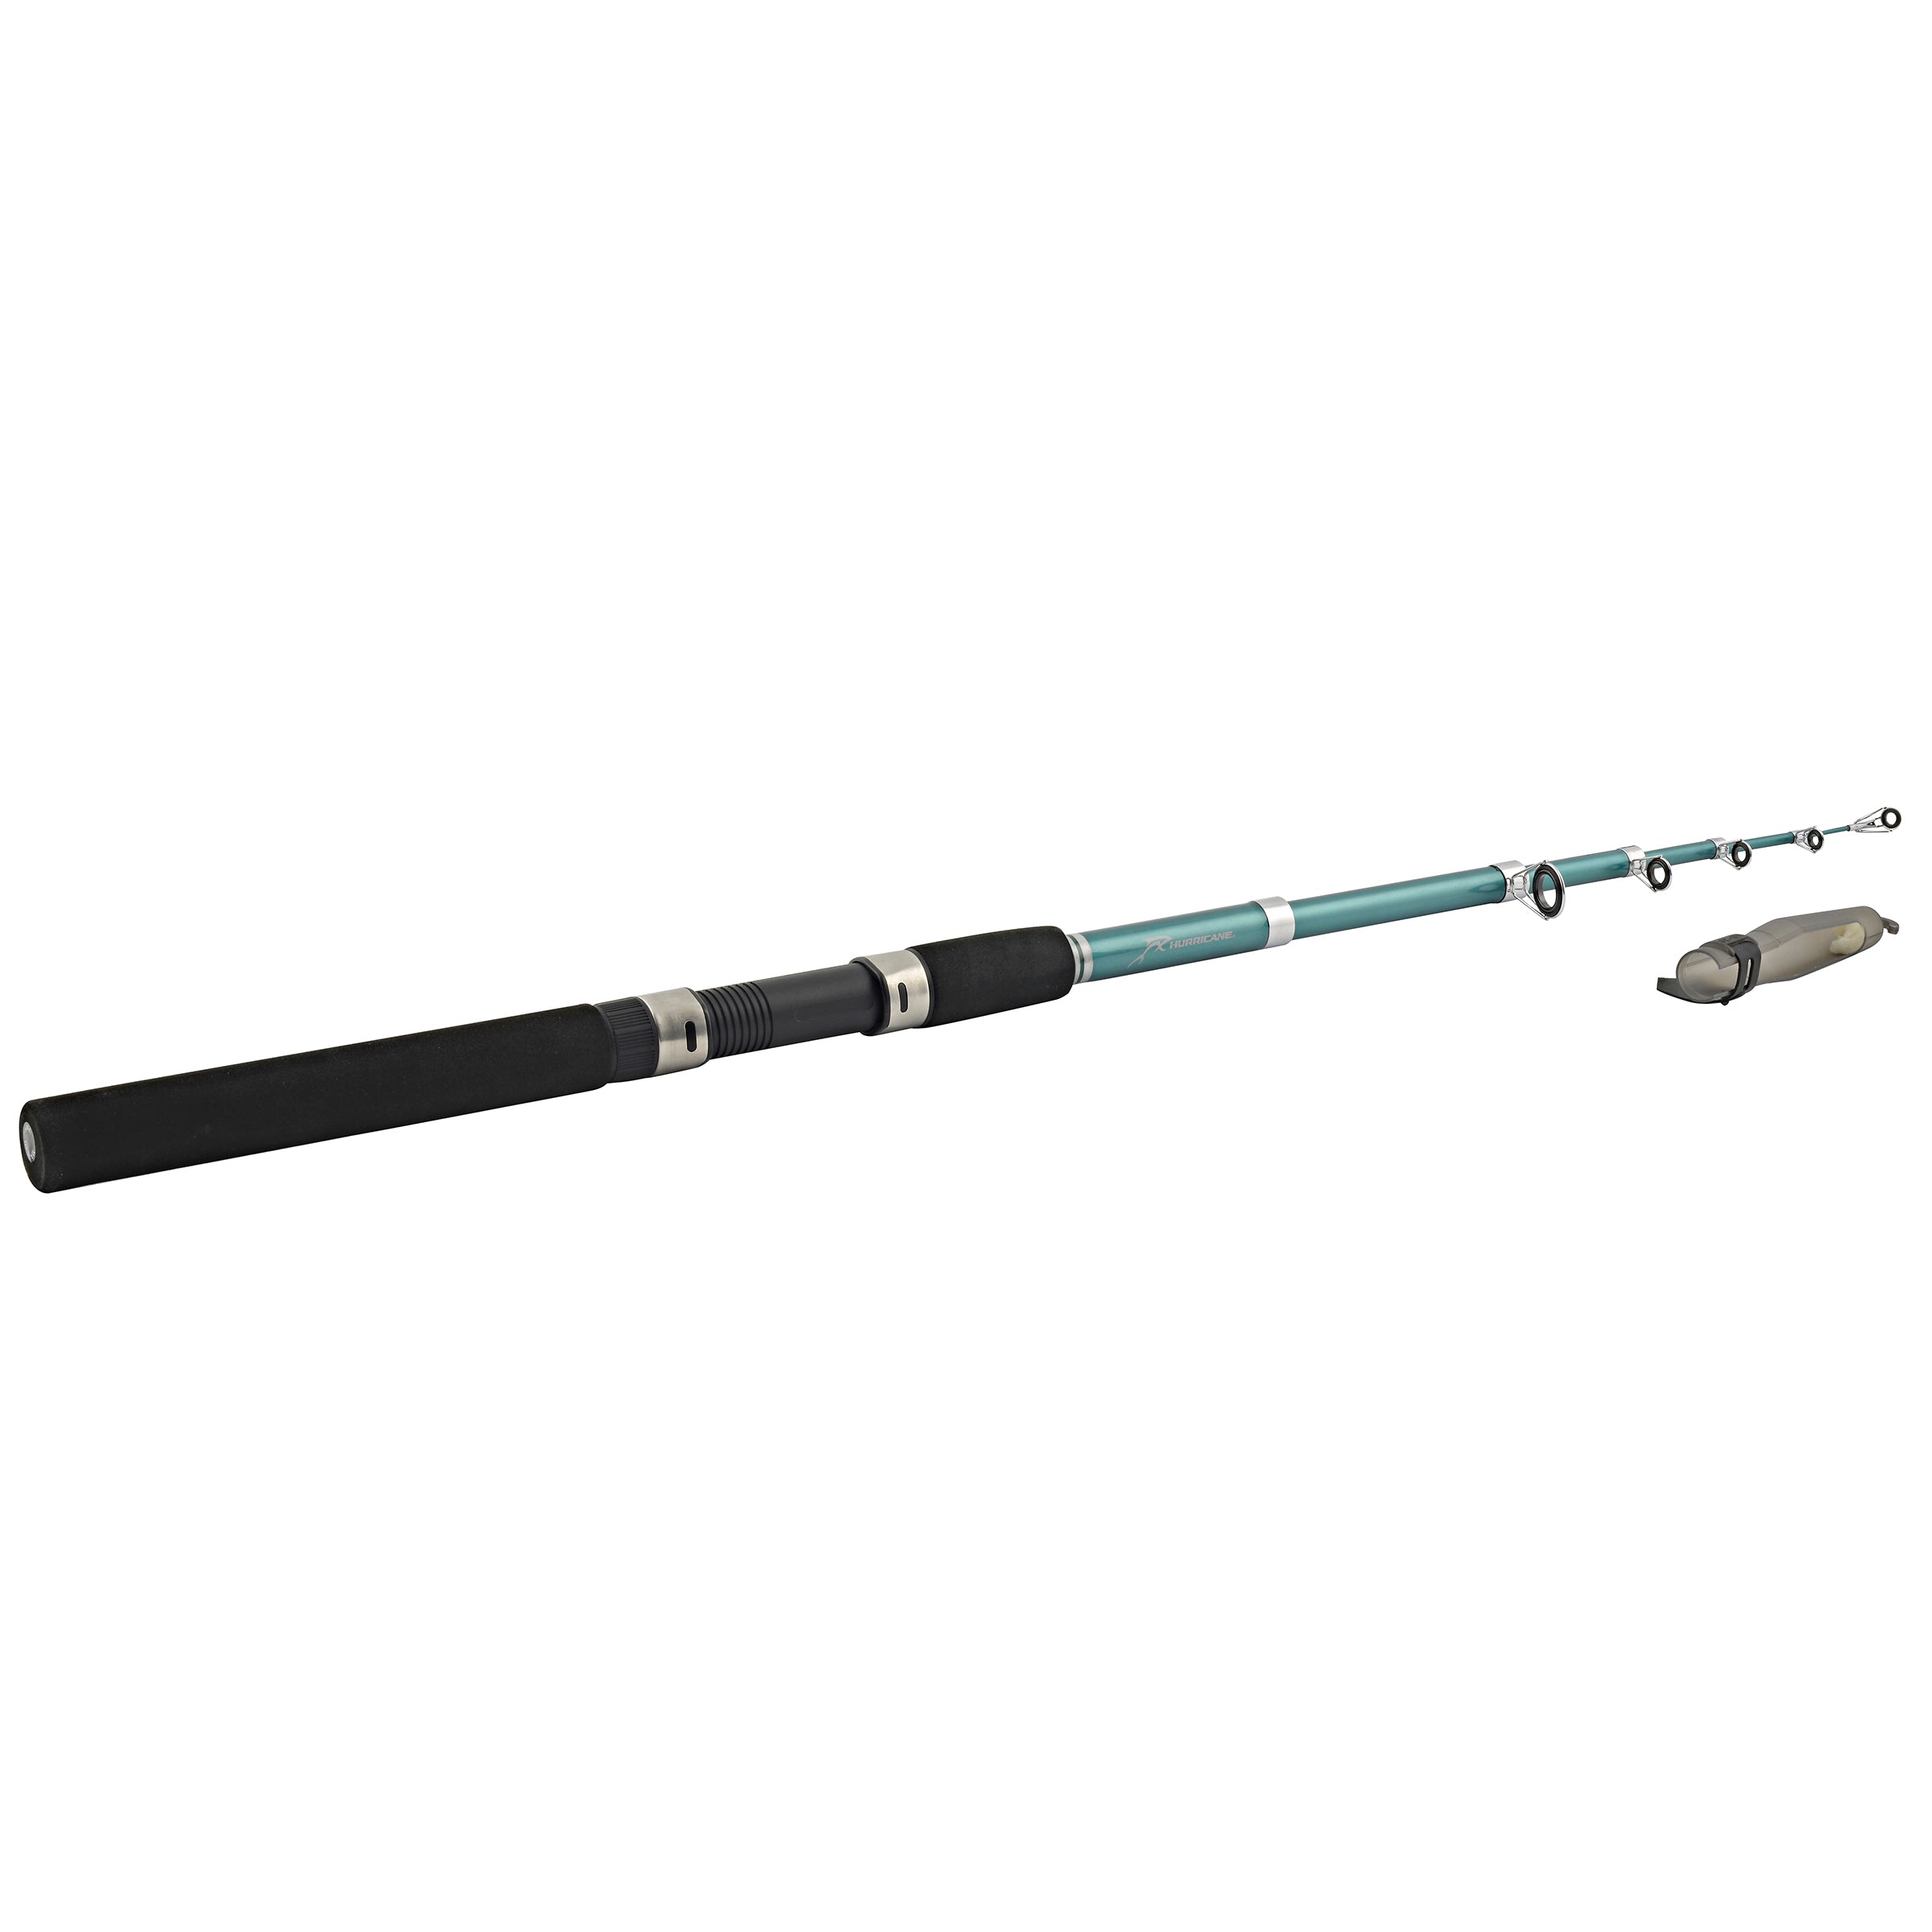 Crappie Stalker Bream Poles, Telescopic Fishing Rod - Import It All